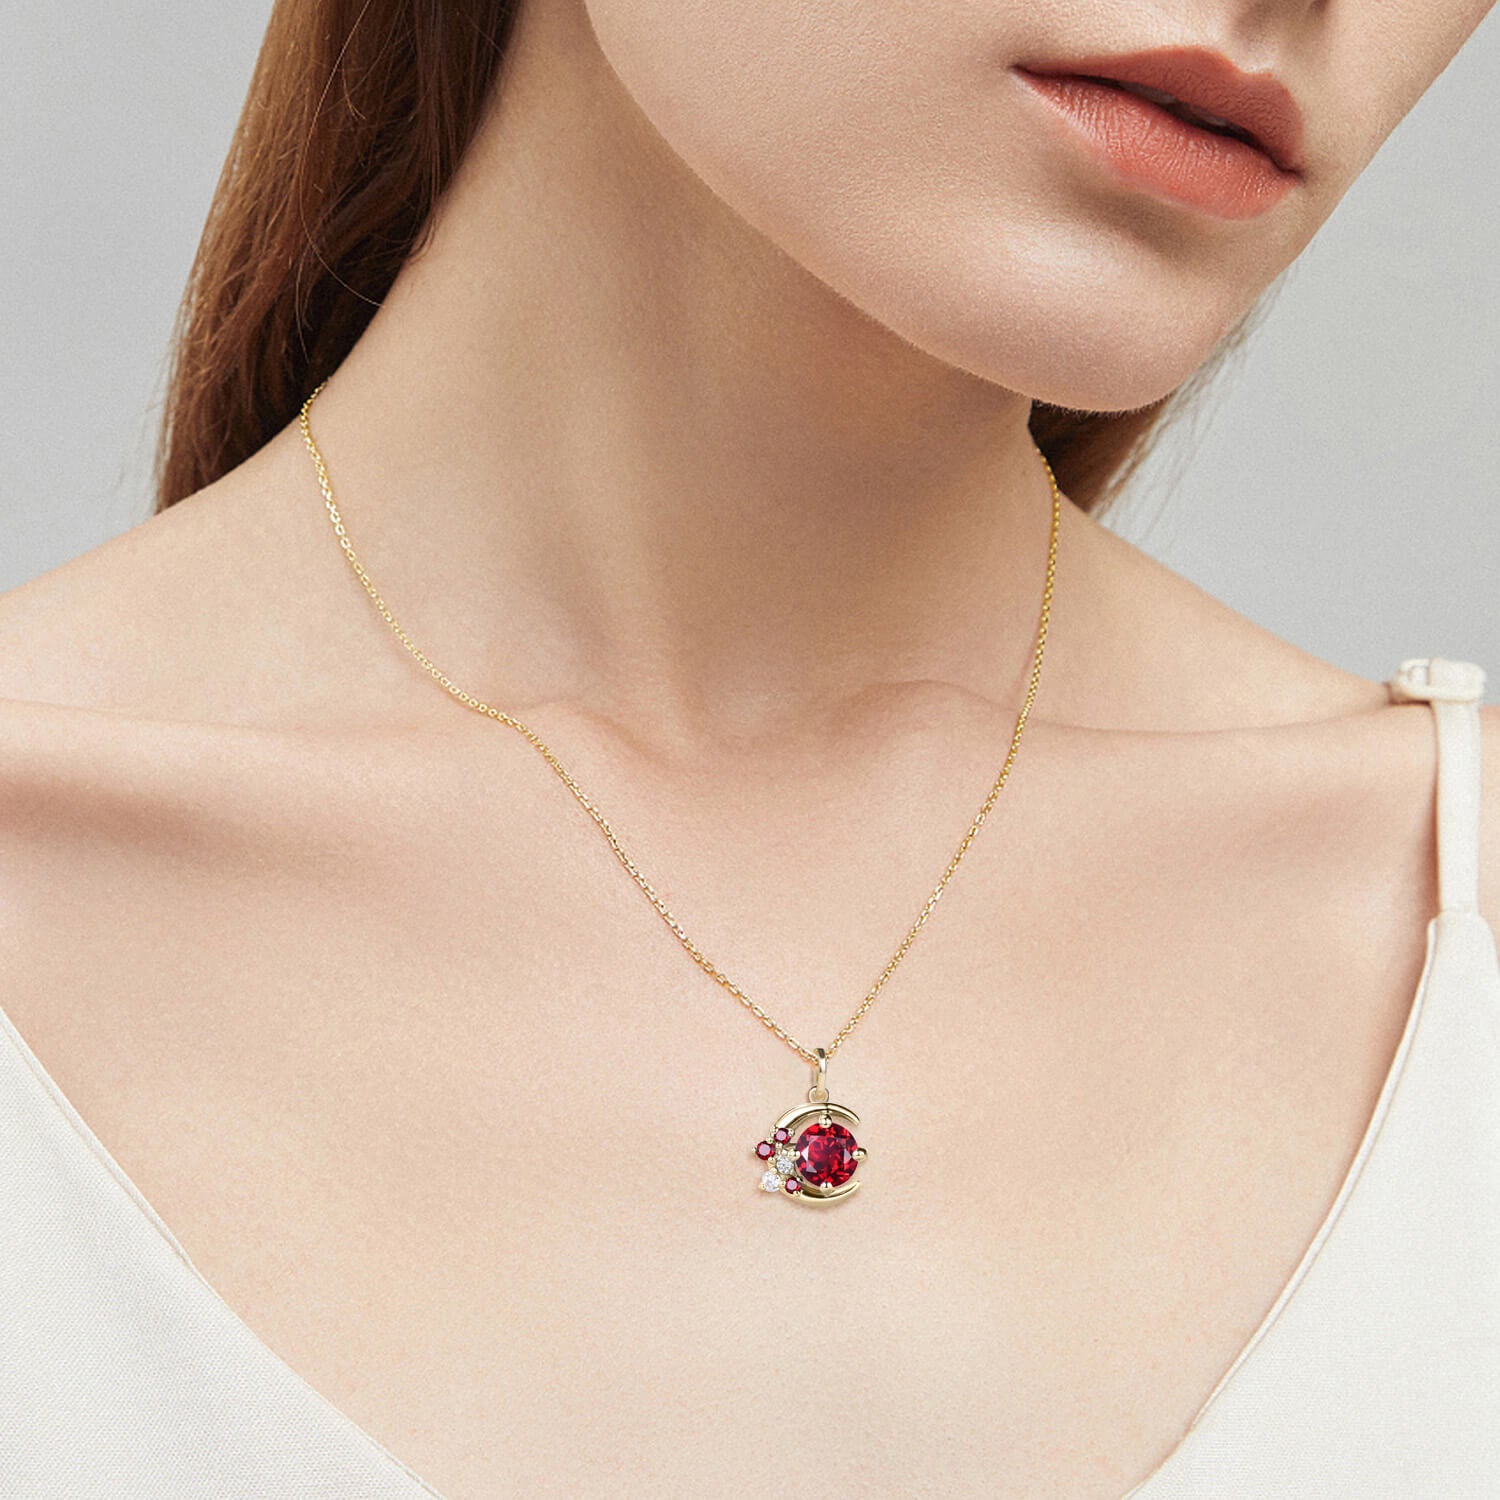 Vintage Crescent moon Ruby pendant necklace cluster moissanite moon pendant necklace 14k/18k rose gold star necklace promise gift for women - PENFINE